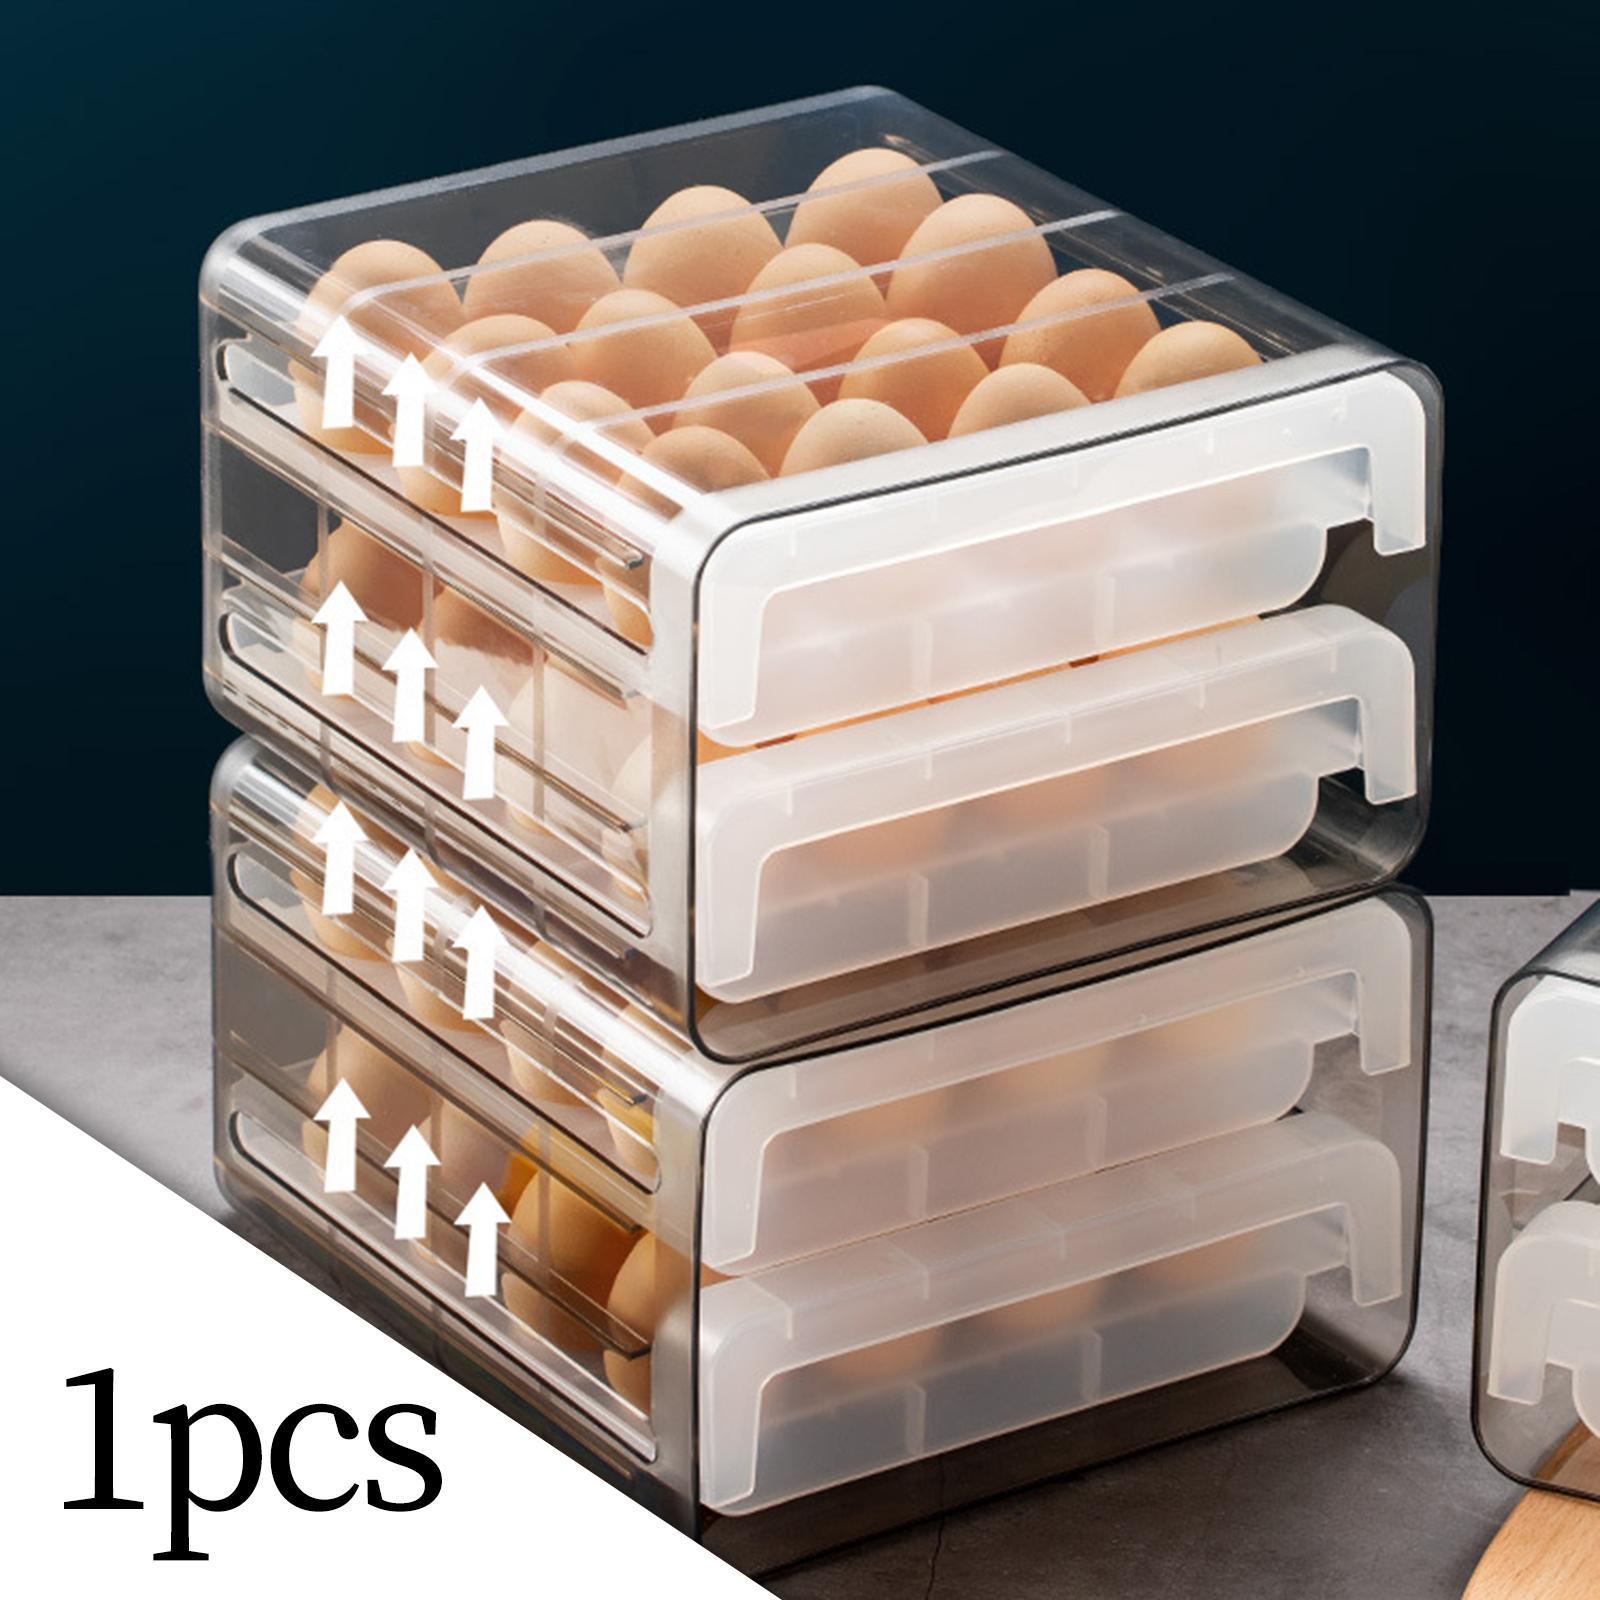 Eggs Holder, Eggs Container Reusable Egg Organizer Bins Eggs Tray Bins Eggs Storage Box, for Kitchen Countertop Restaurant Fridge Cabinet